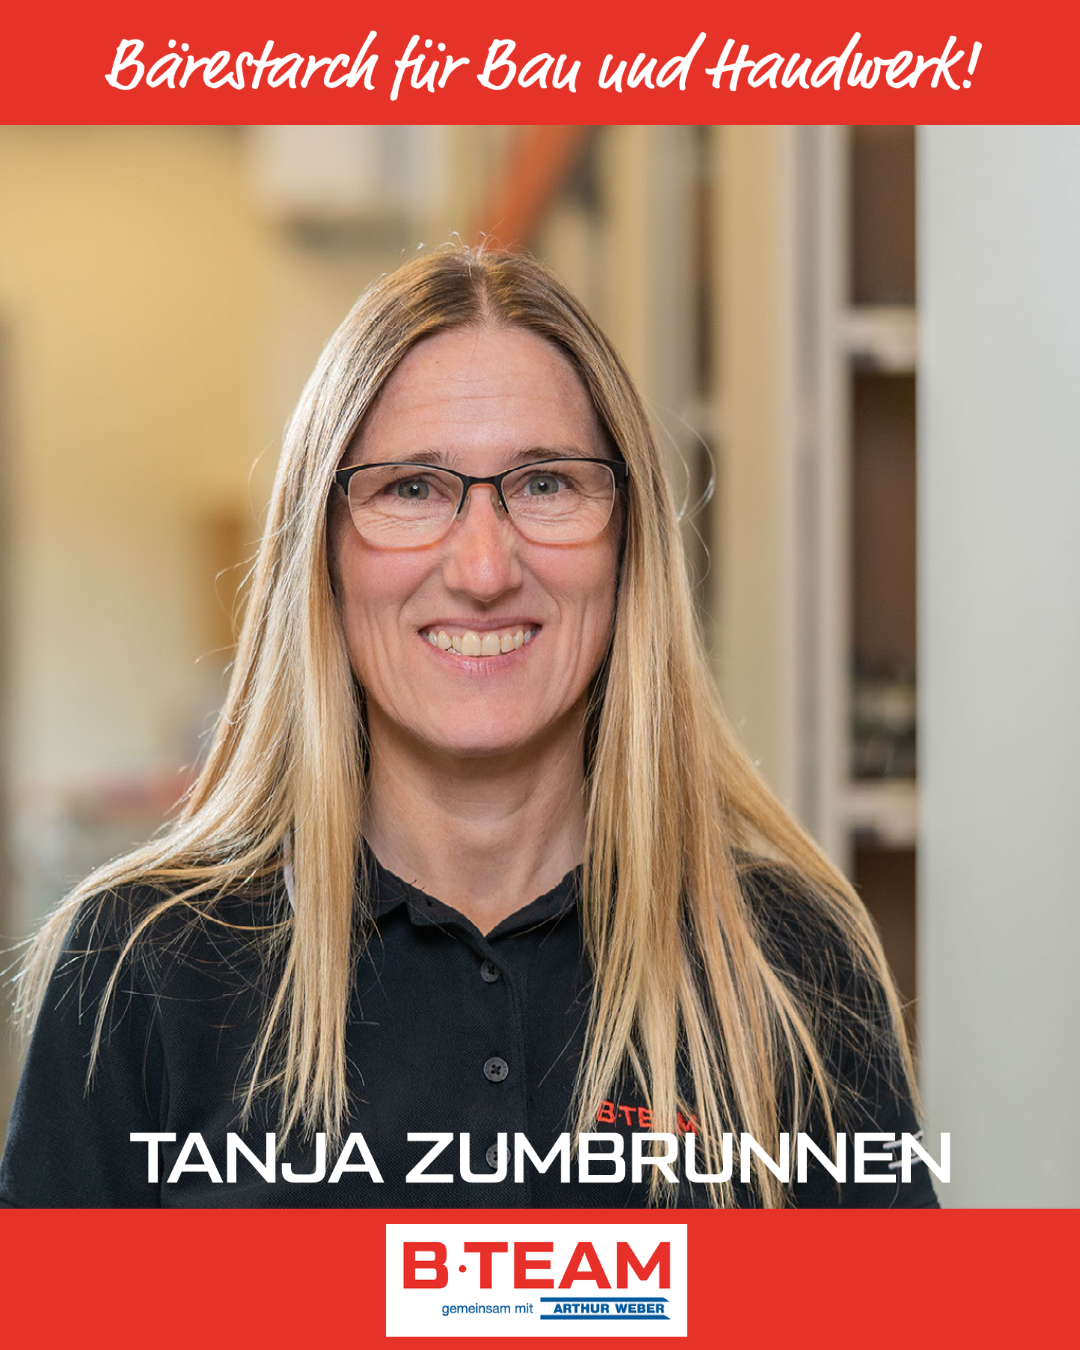 Tanja Zumbrunnen